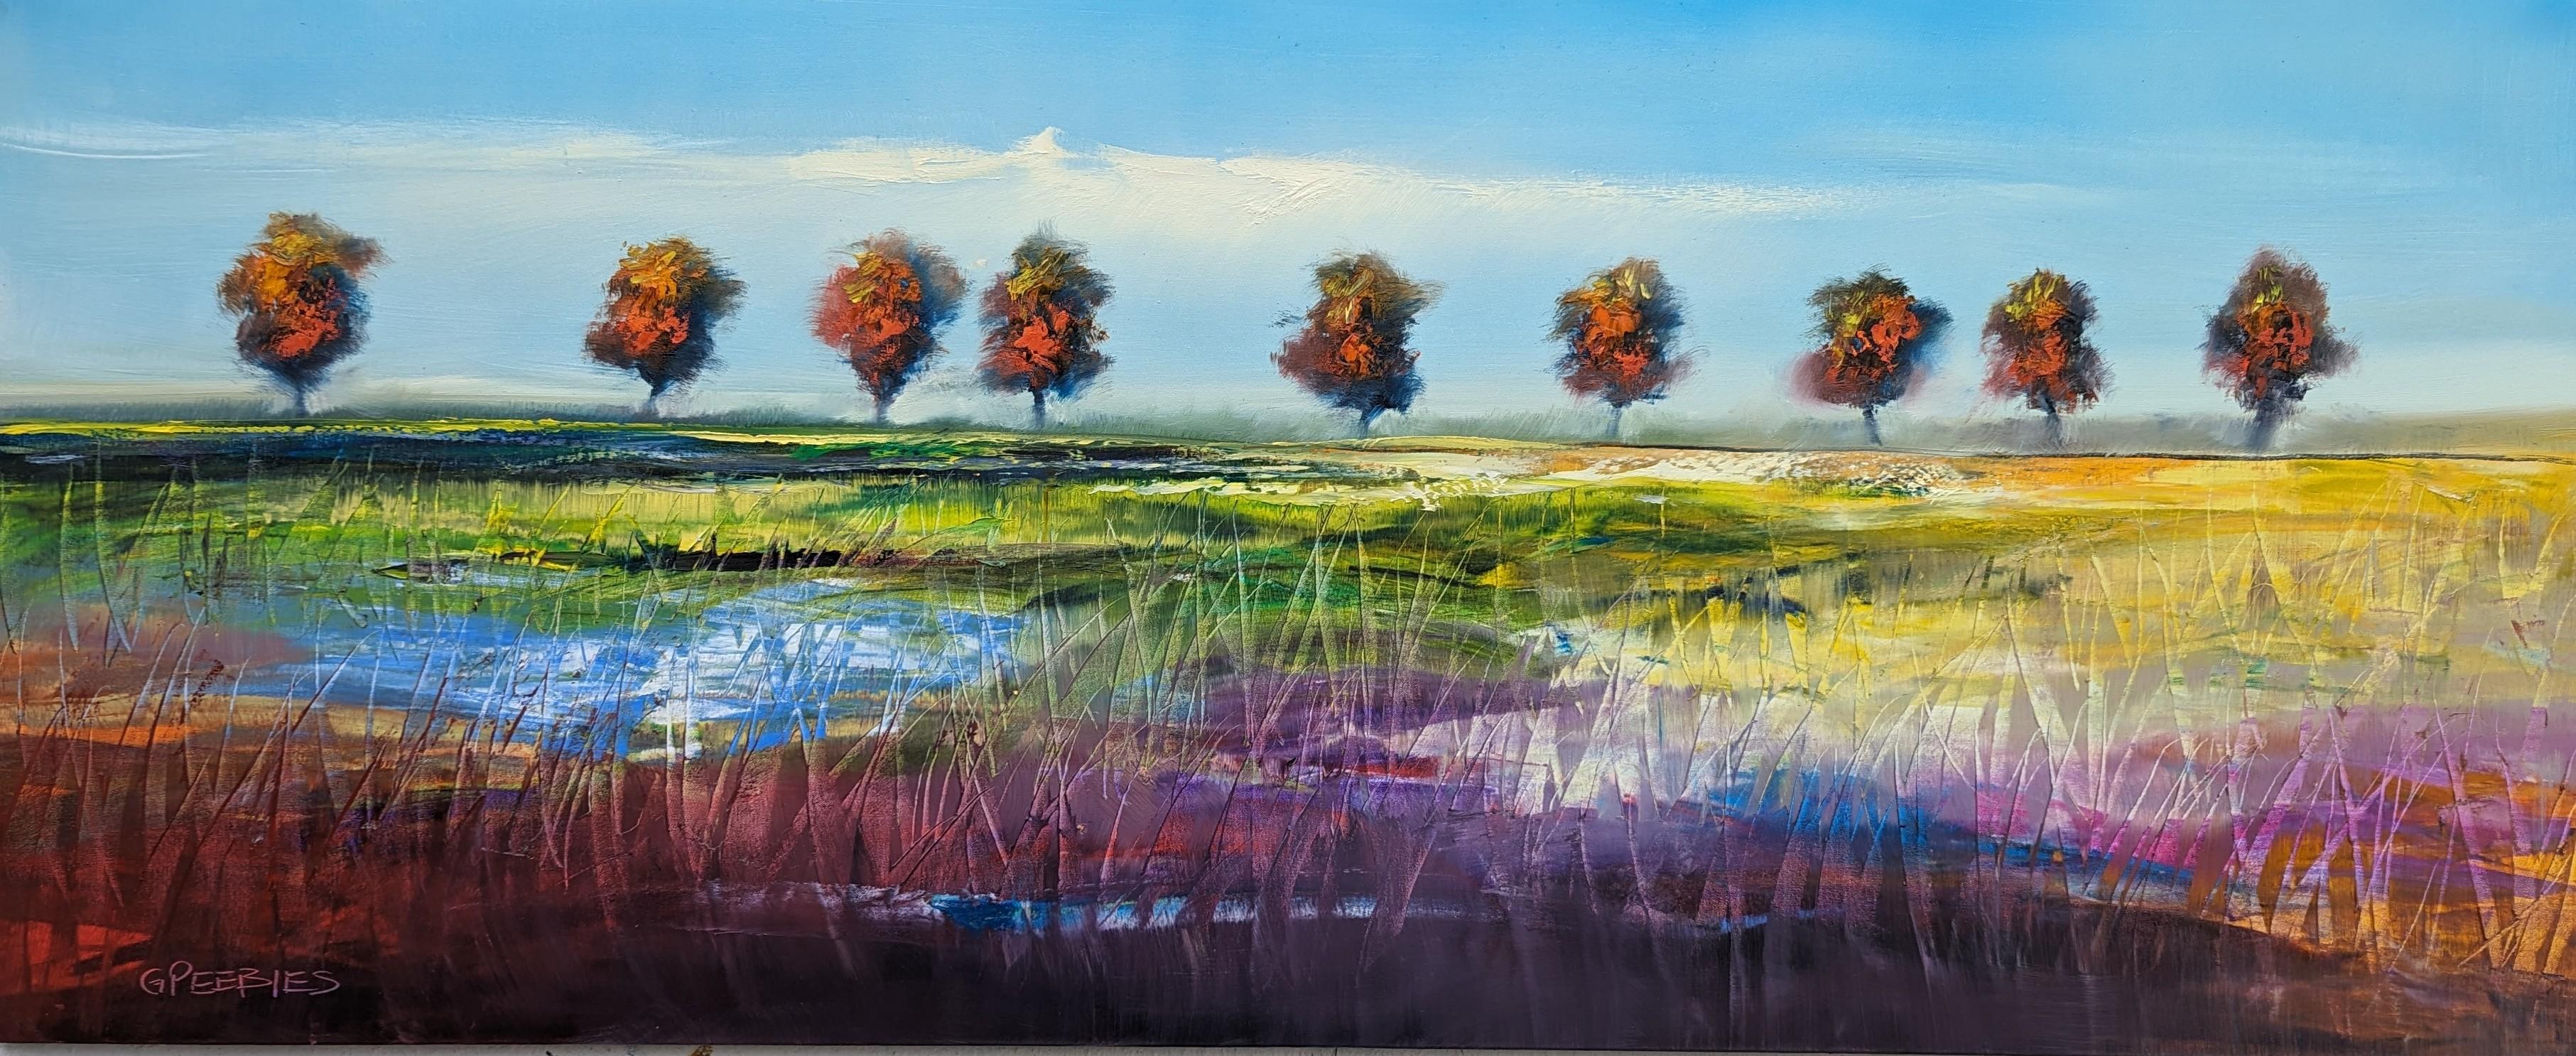 George Peebles Landscape Painting - Hilltop View, Oil Painting